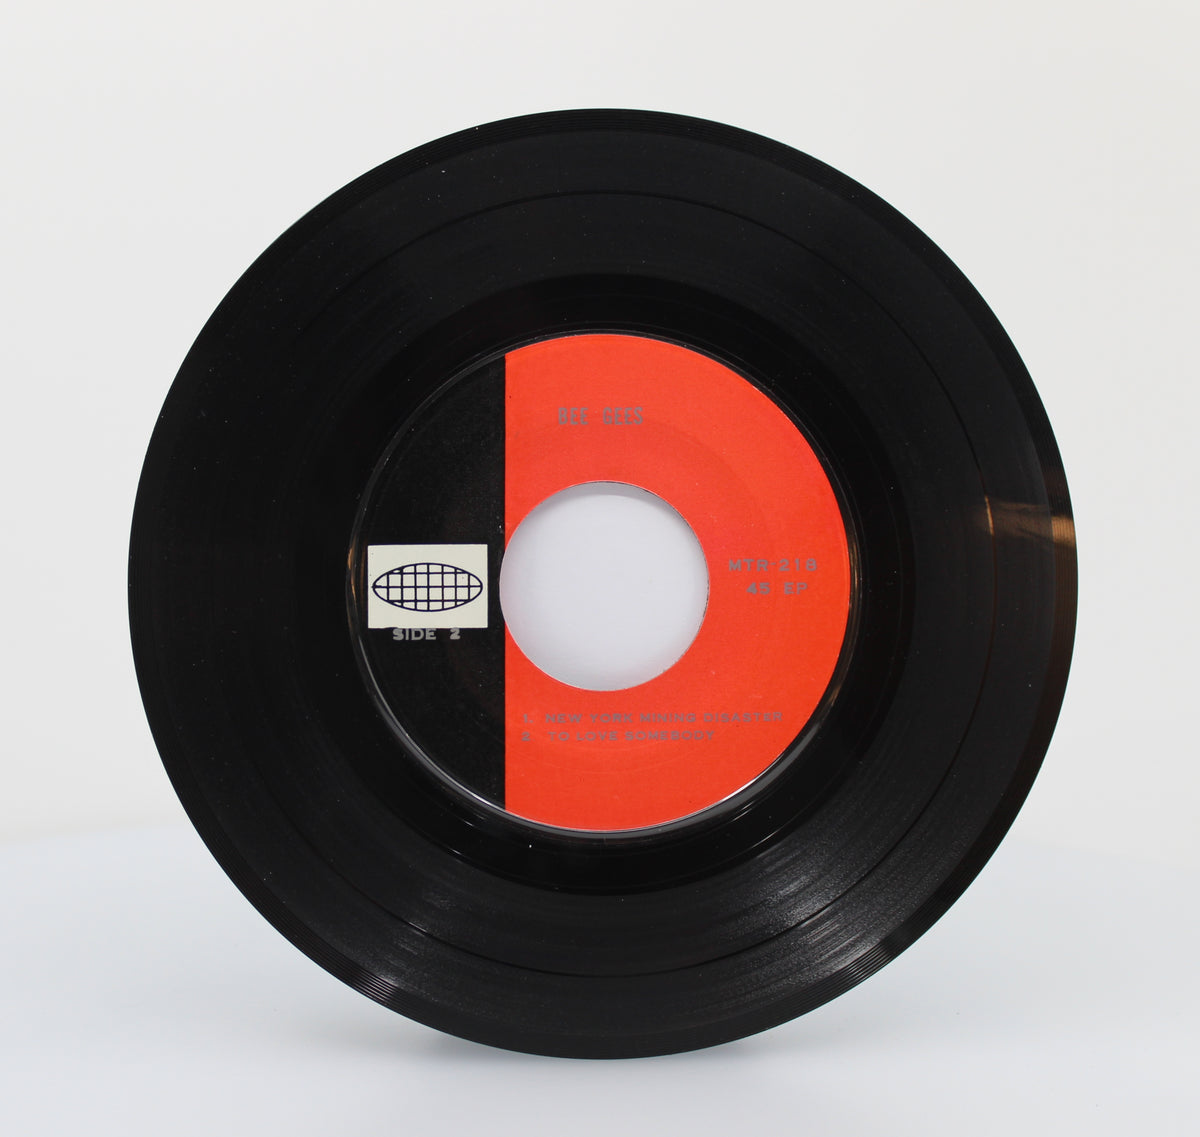 Bee Gees - Massachusetts, Vinyl Single (45rpm), Thailand